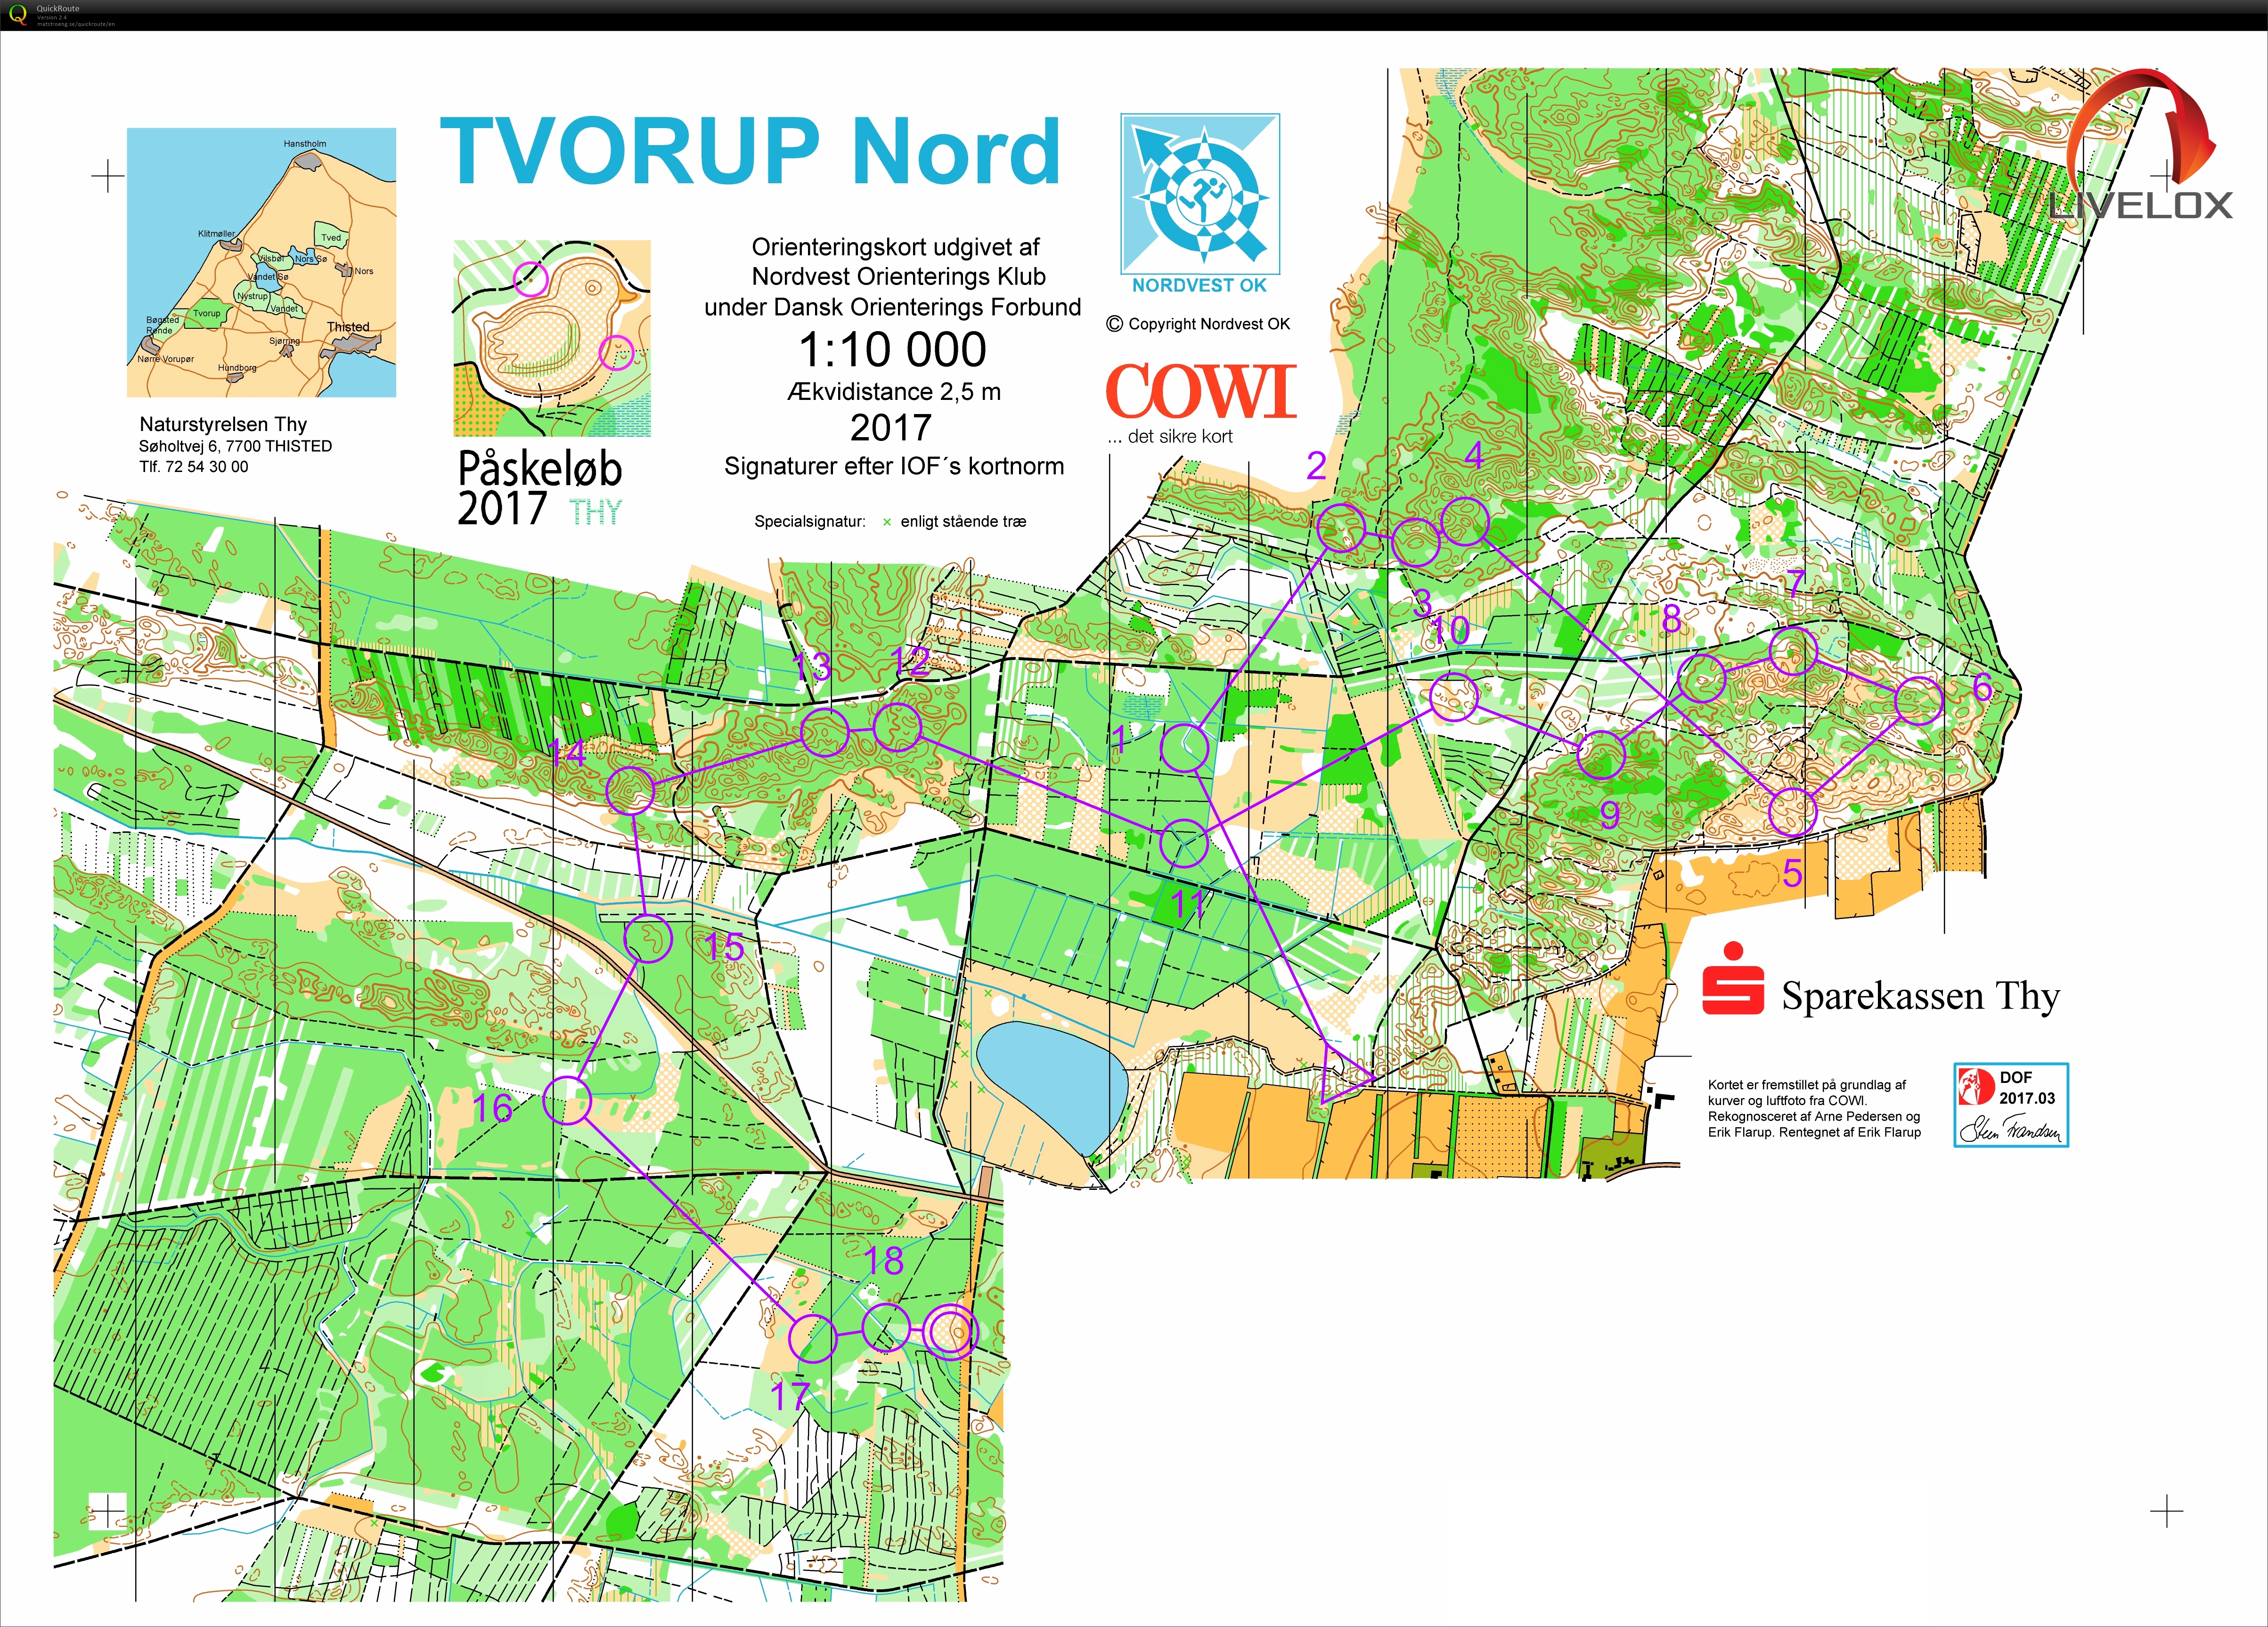 Tvorup Nord påskeløb 2017 etape 2 - H21AK (14-04-2017)